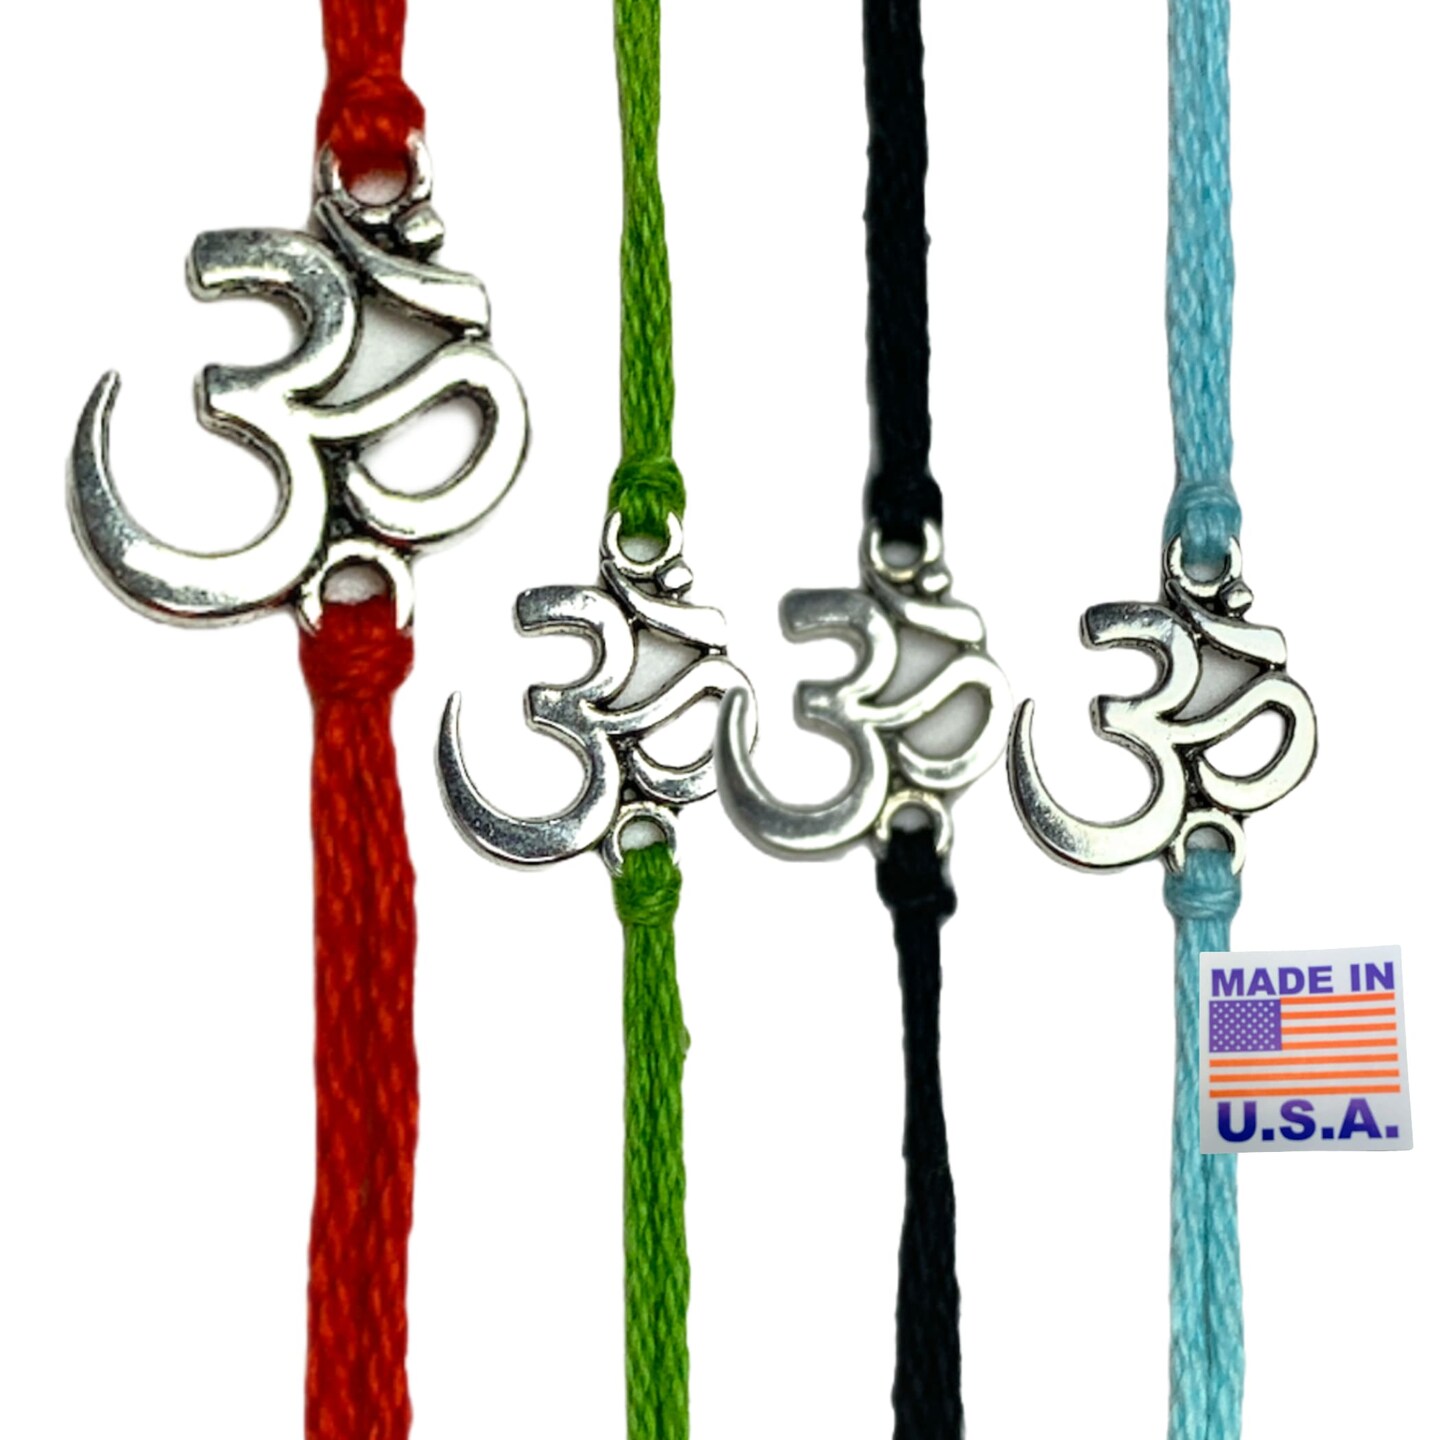 Om Raksha Bandhan Rakhi Memorial Bracelet, Red Thread Hindu Festival Bracelet For Sister And Brother Made In Usa